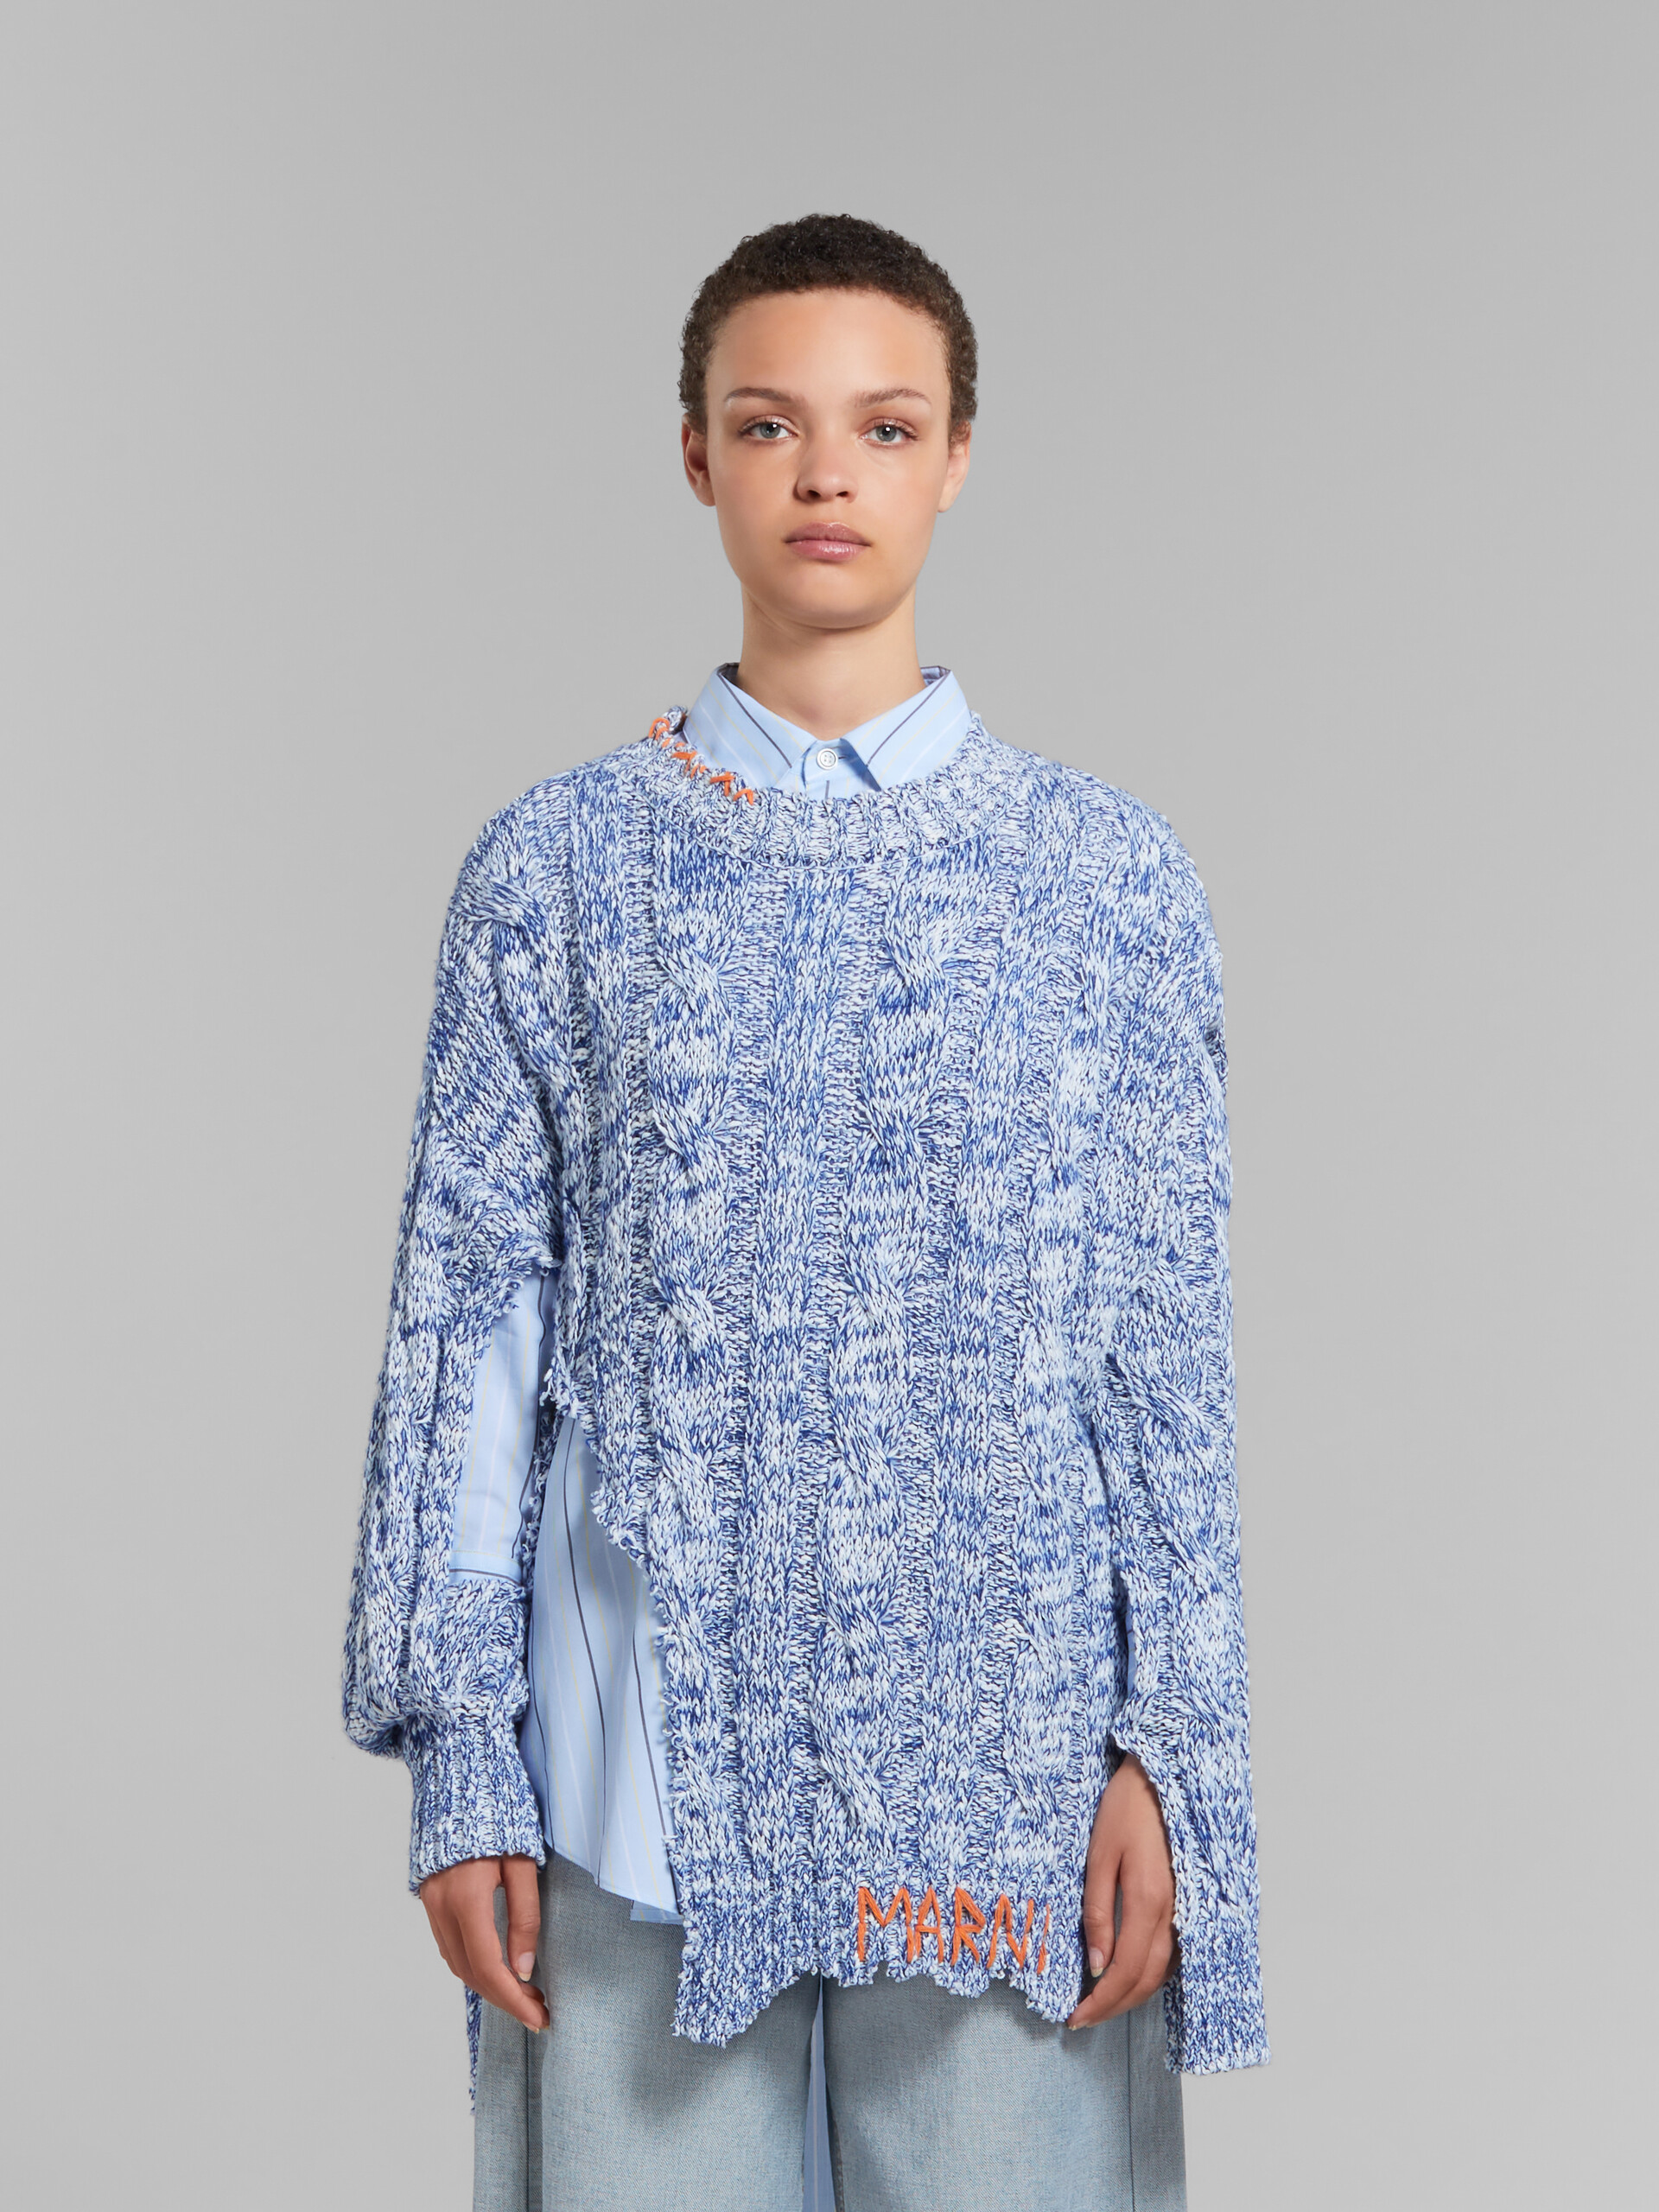 Jersey azul de mouliné con bordes deshilachados - jerseys - Image 2